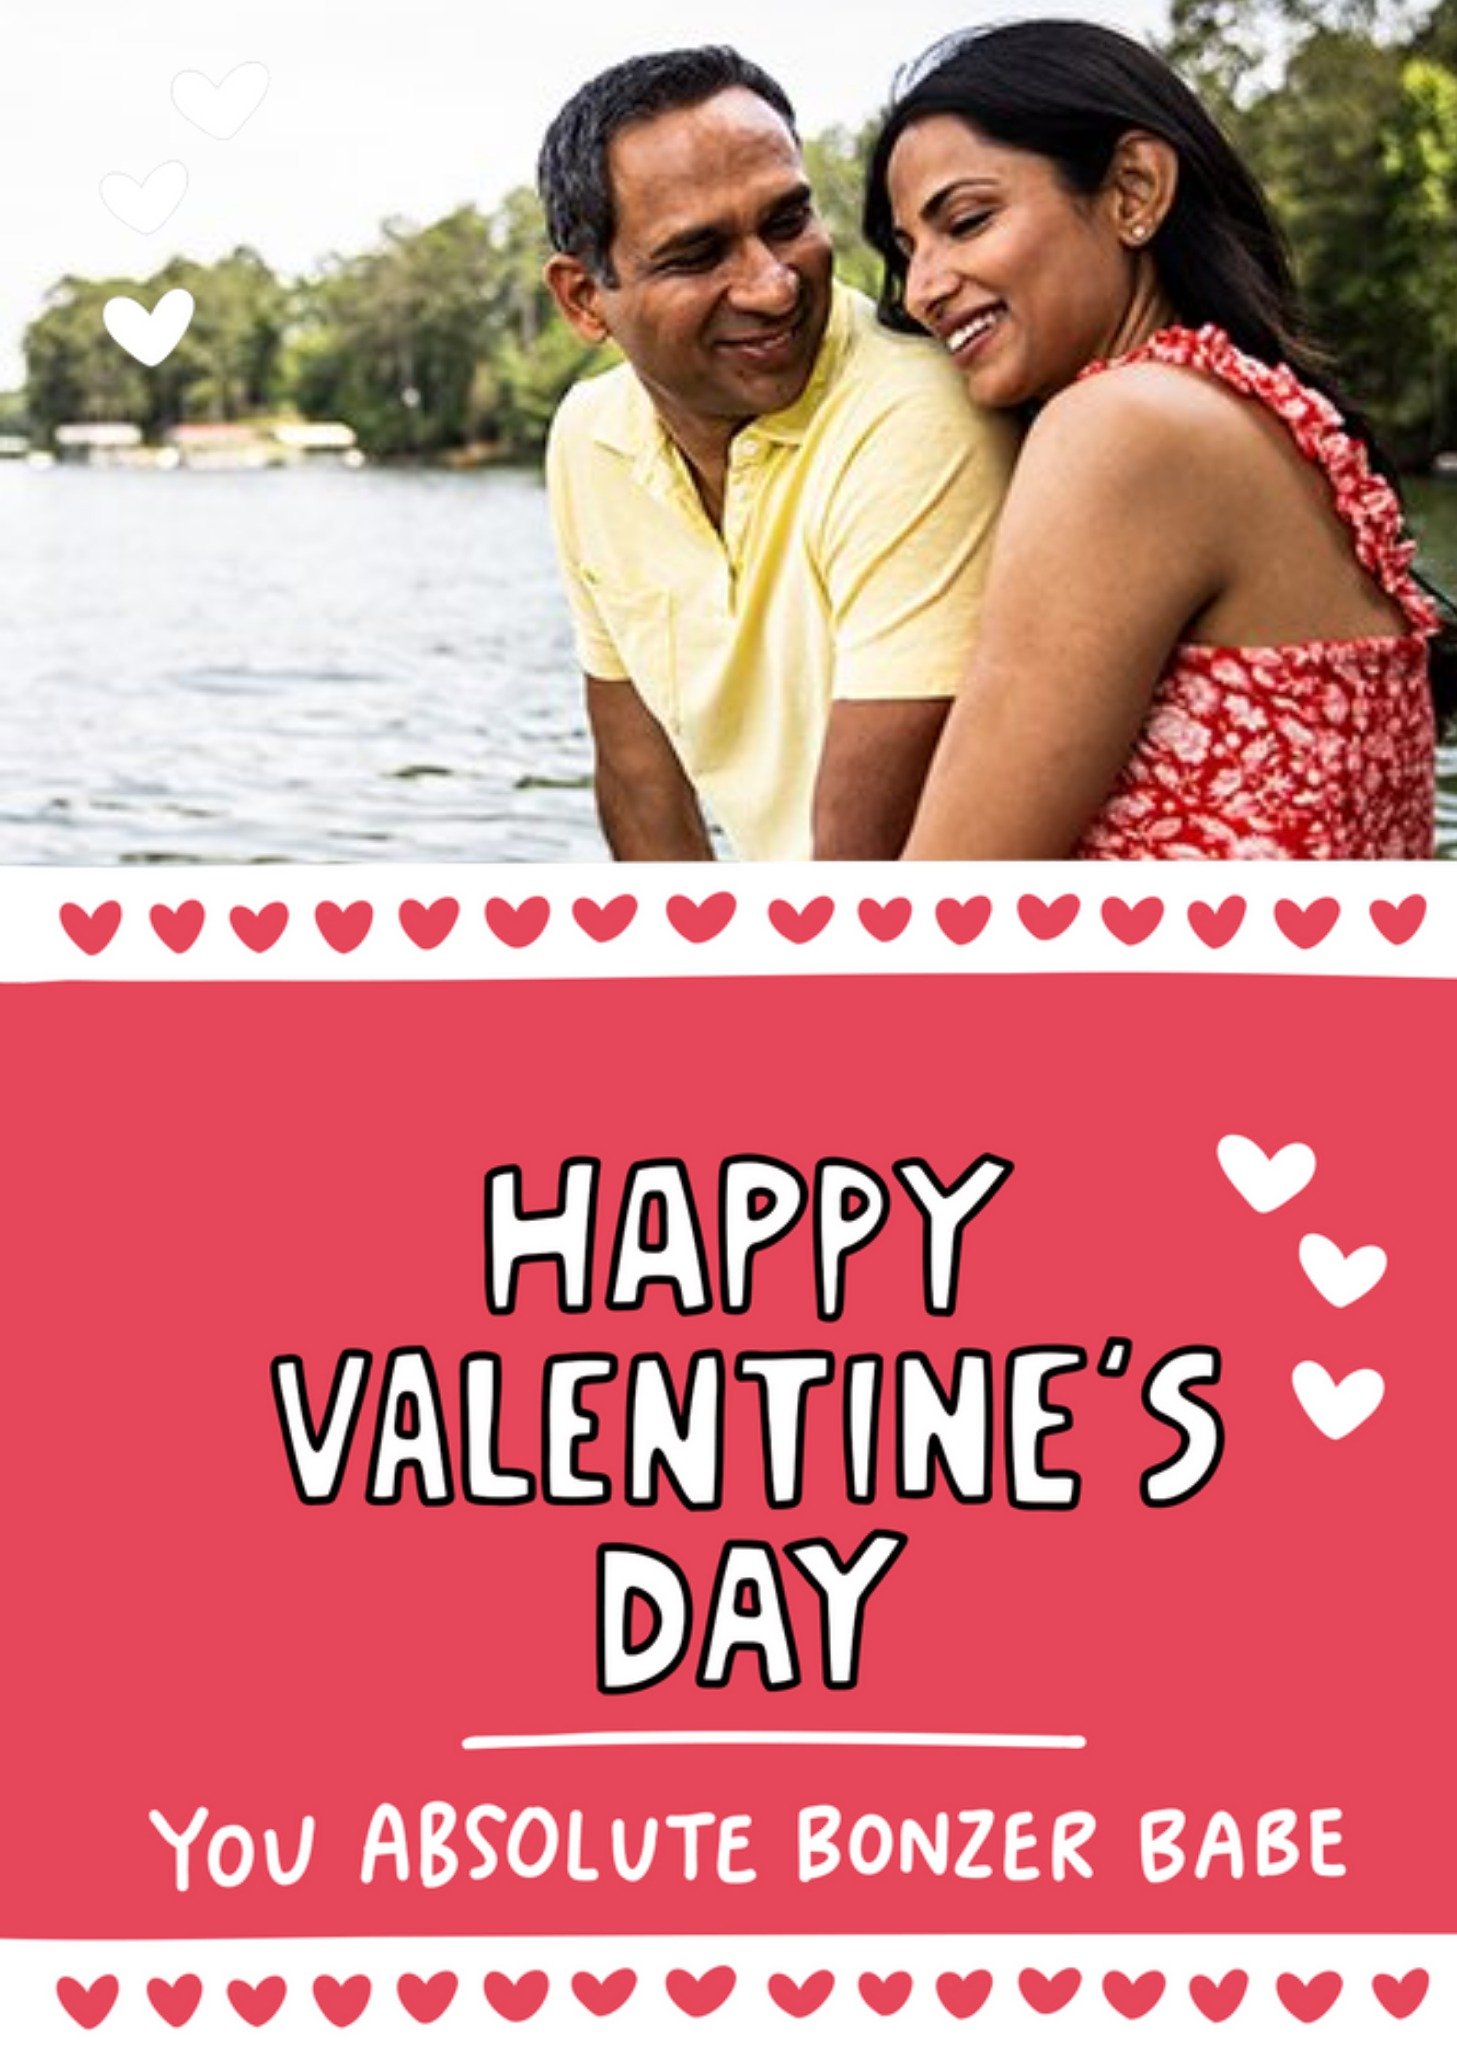 Love Hearts Angela Chick Illustration Valentine's Day Photo Upload Hearts Card Ecard